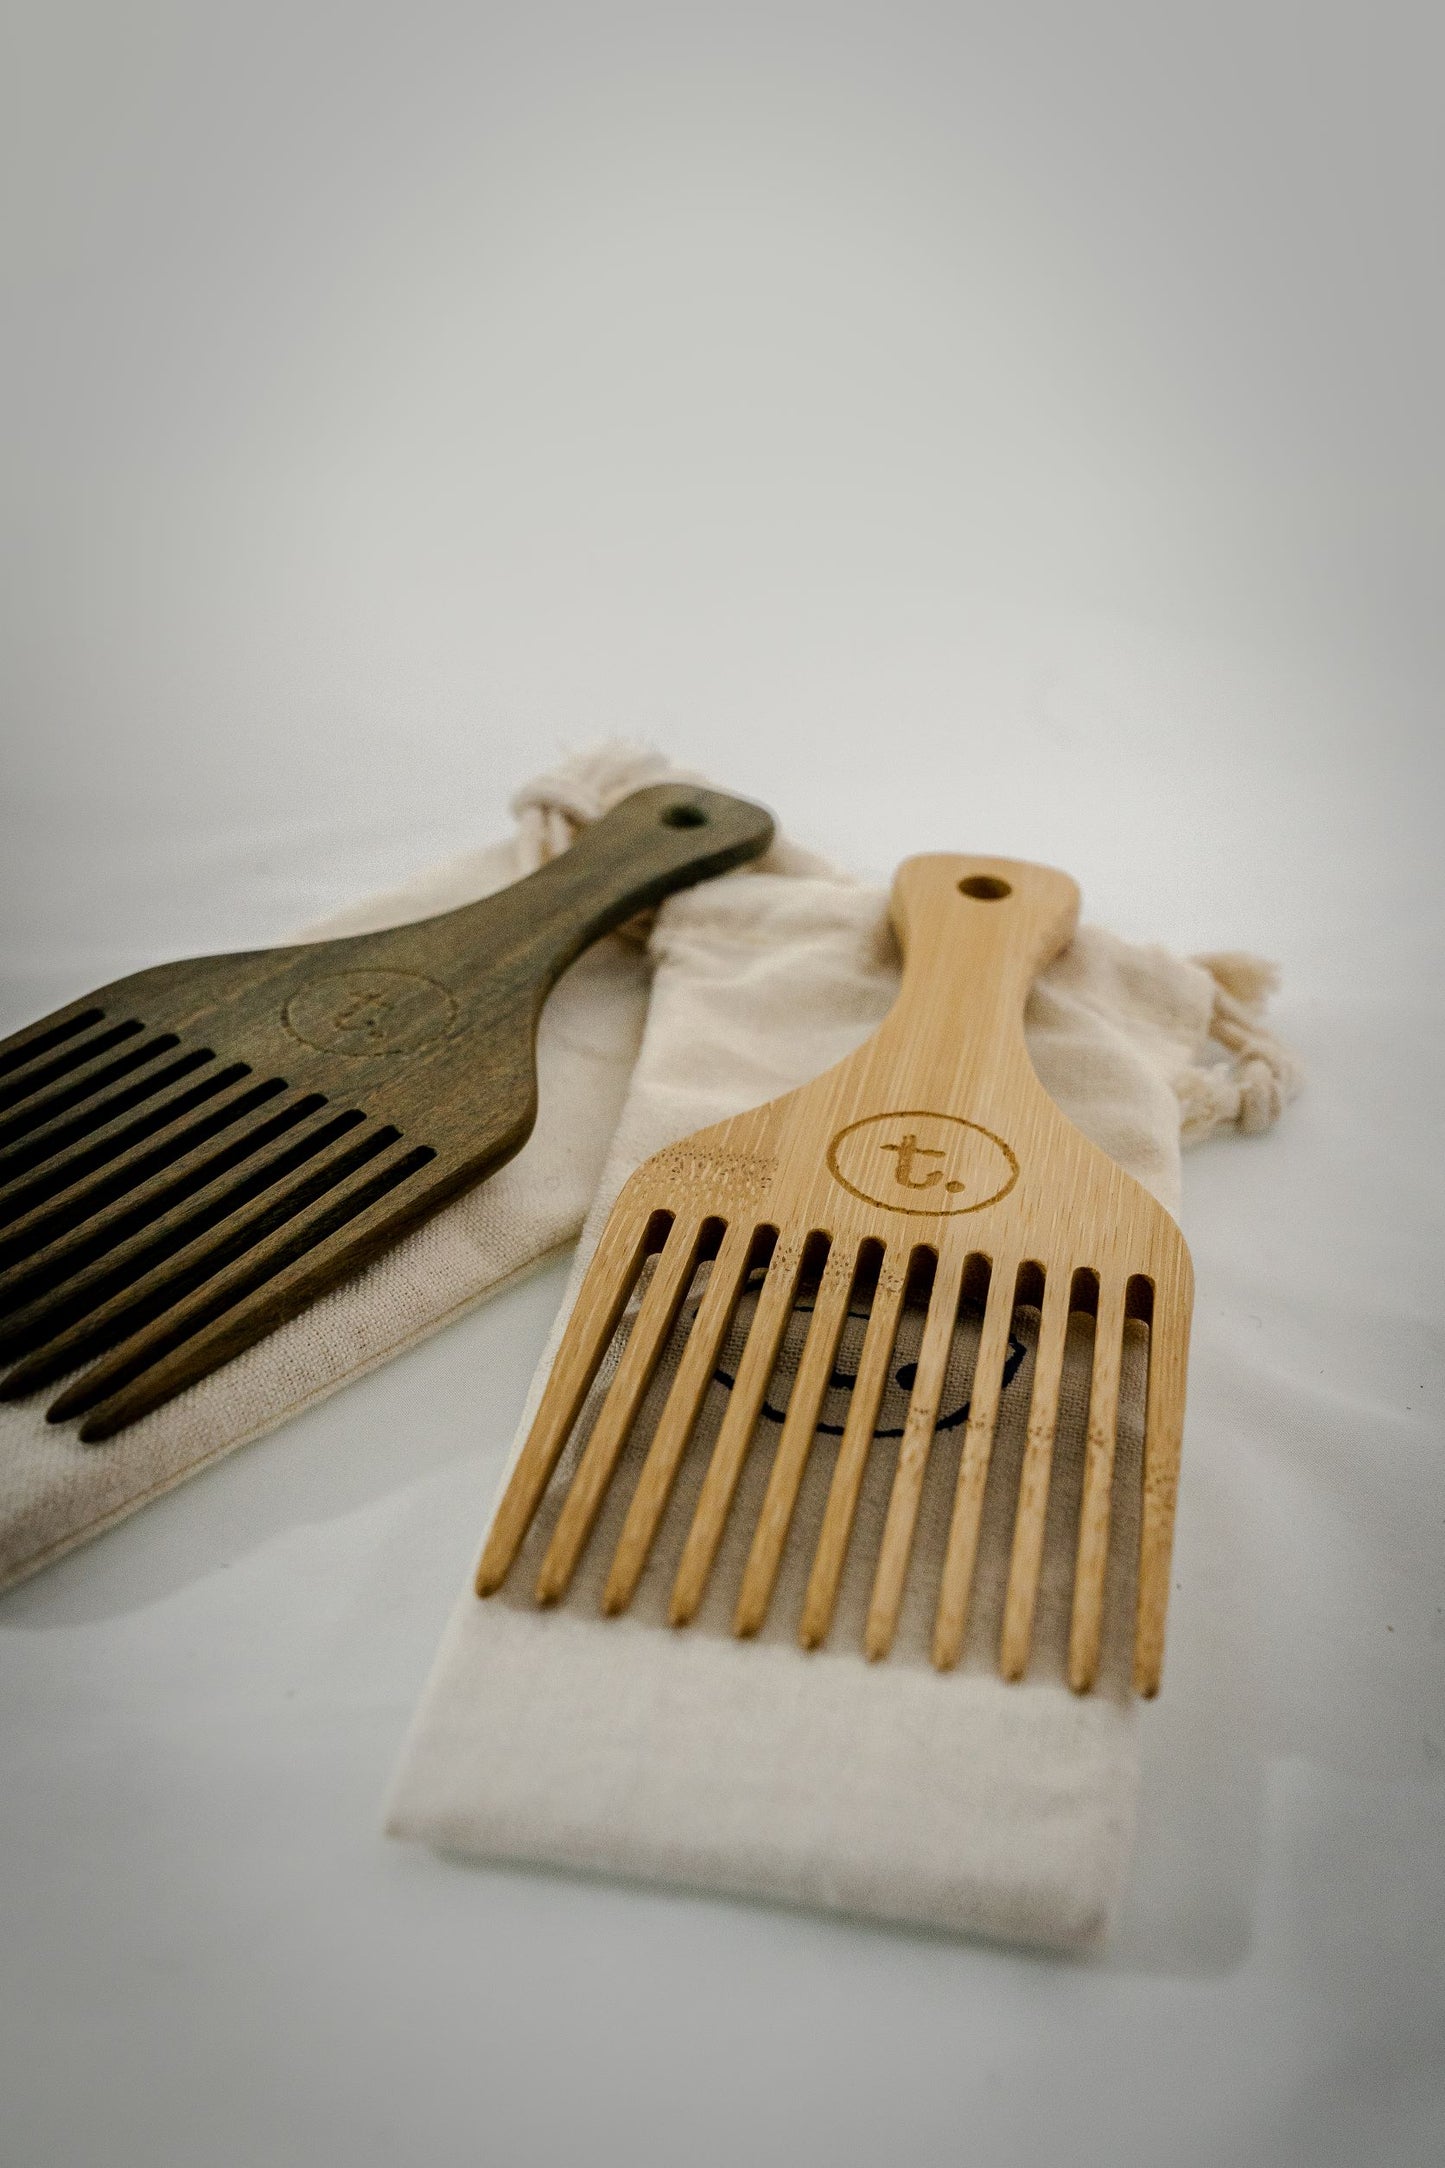 Wooden Comb Beard Comb Peachwood Hair Comb Wholesale Bulk Sale 10